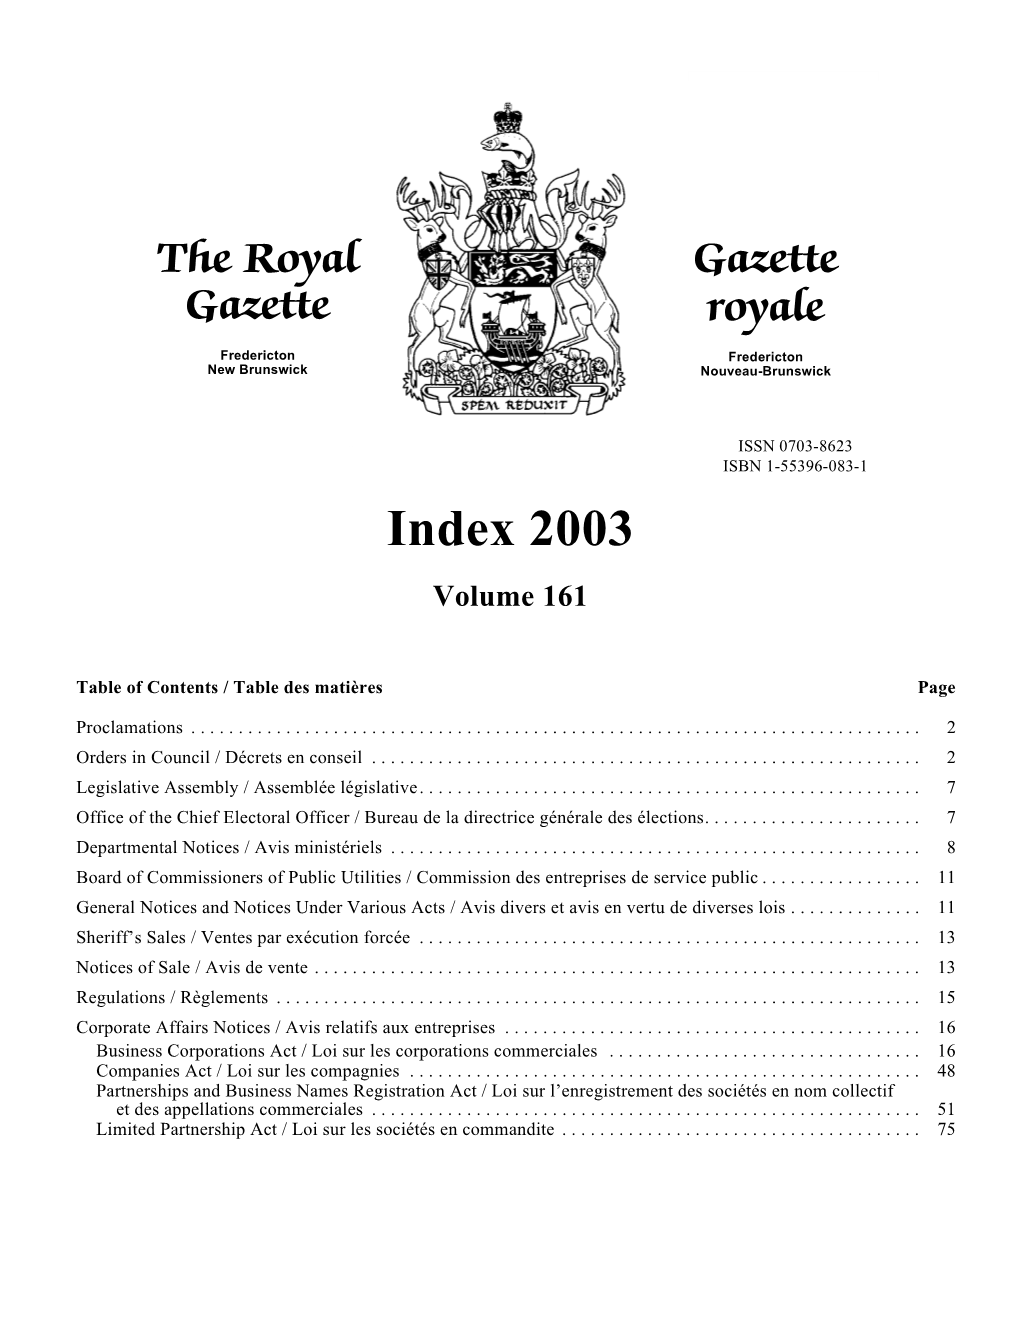 The Royal Gazette Index 2003